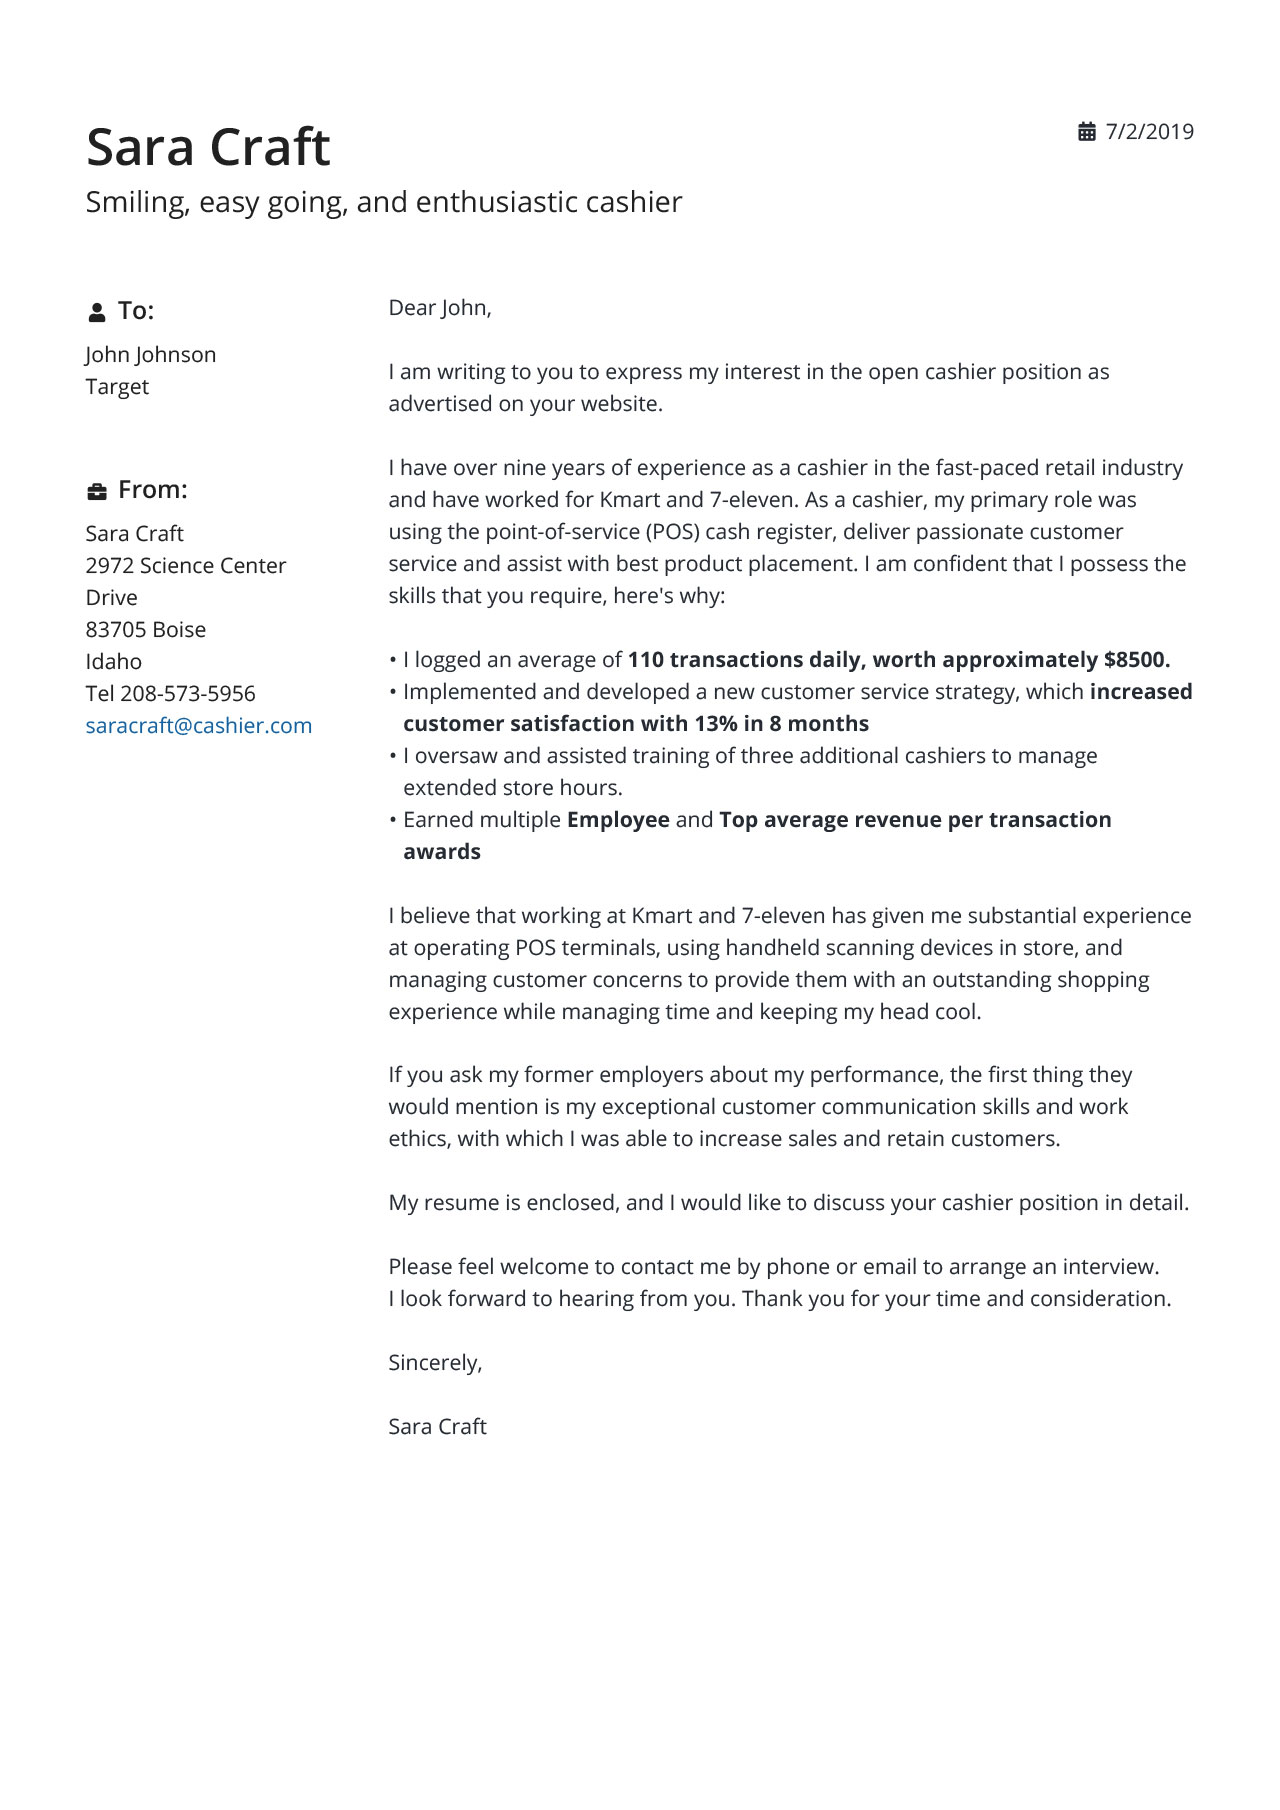 Resume Cover Letter Examples 2019 from jofibostorage.blob.core.windows.net